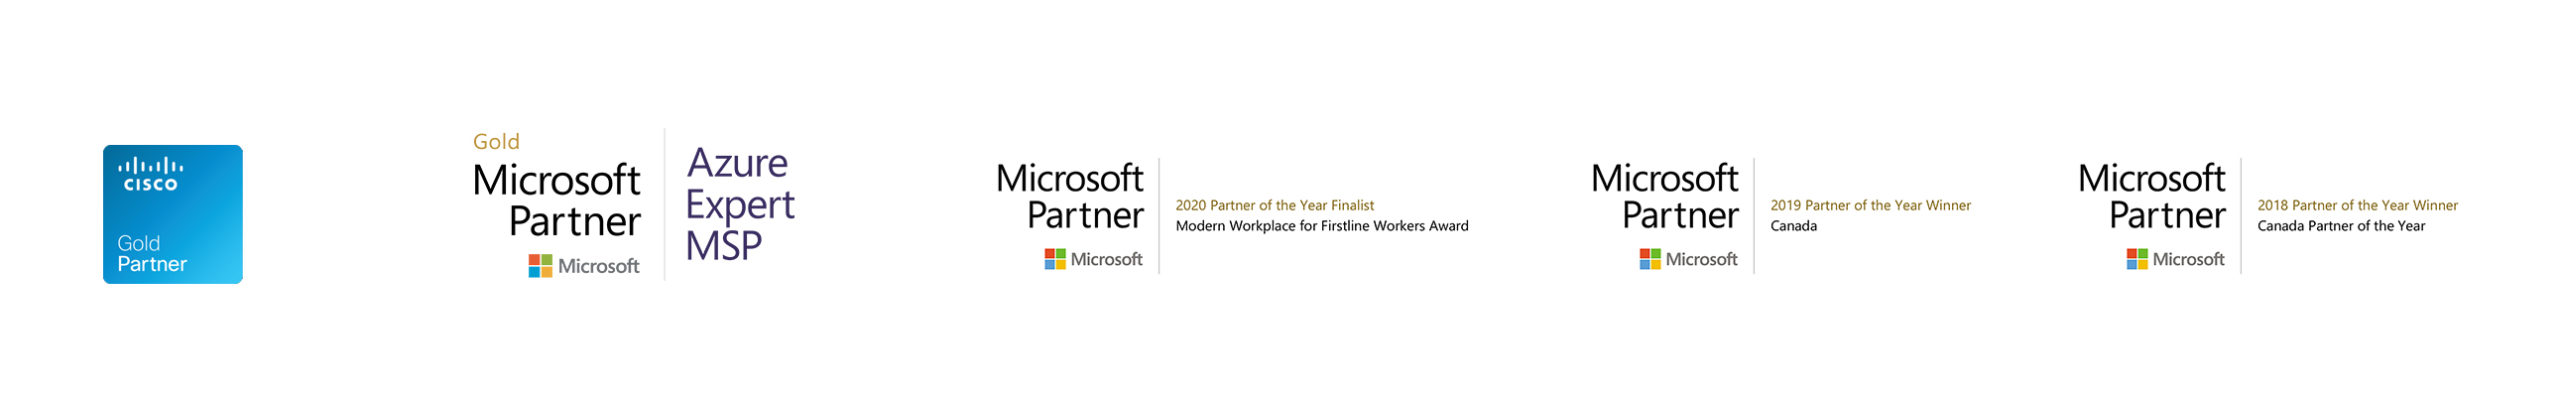 Cisco Microsoft Awards